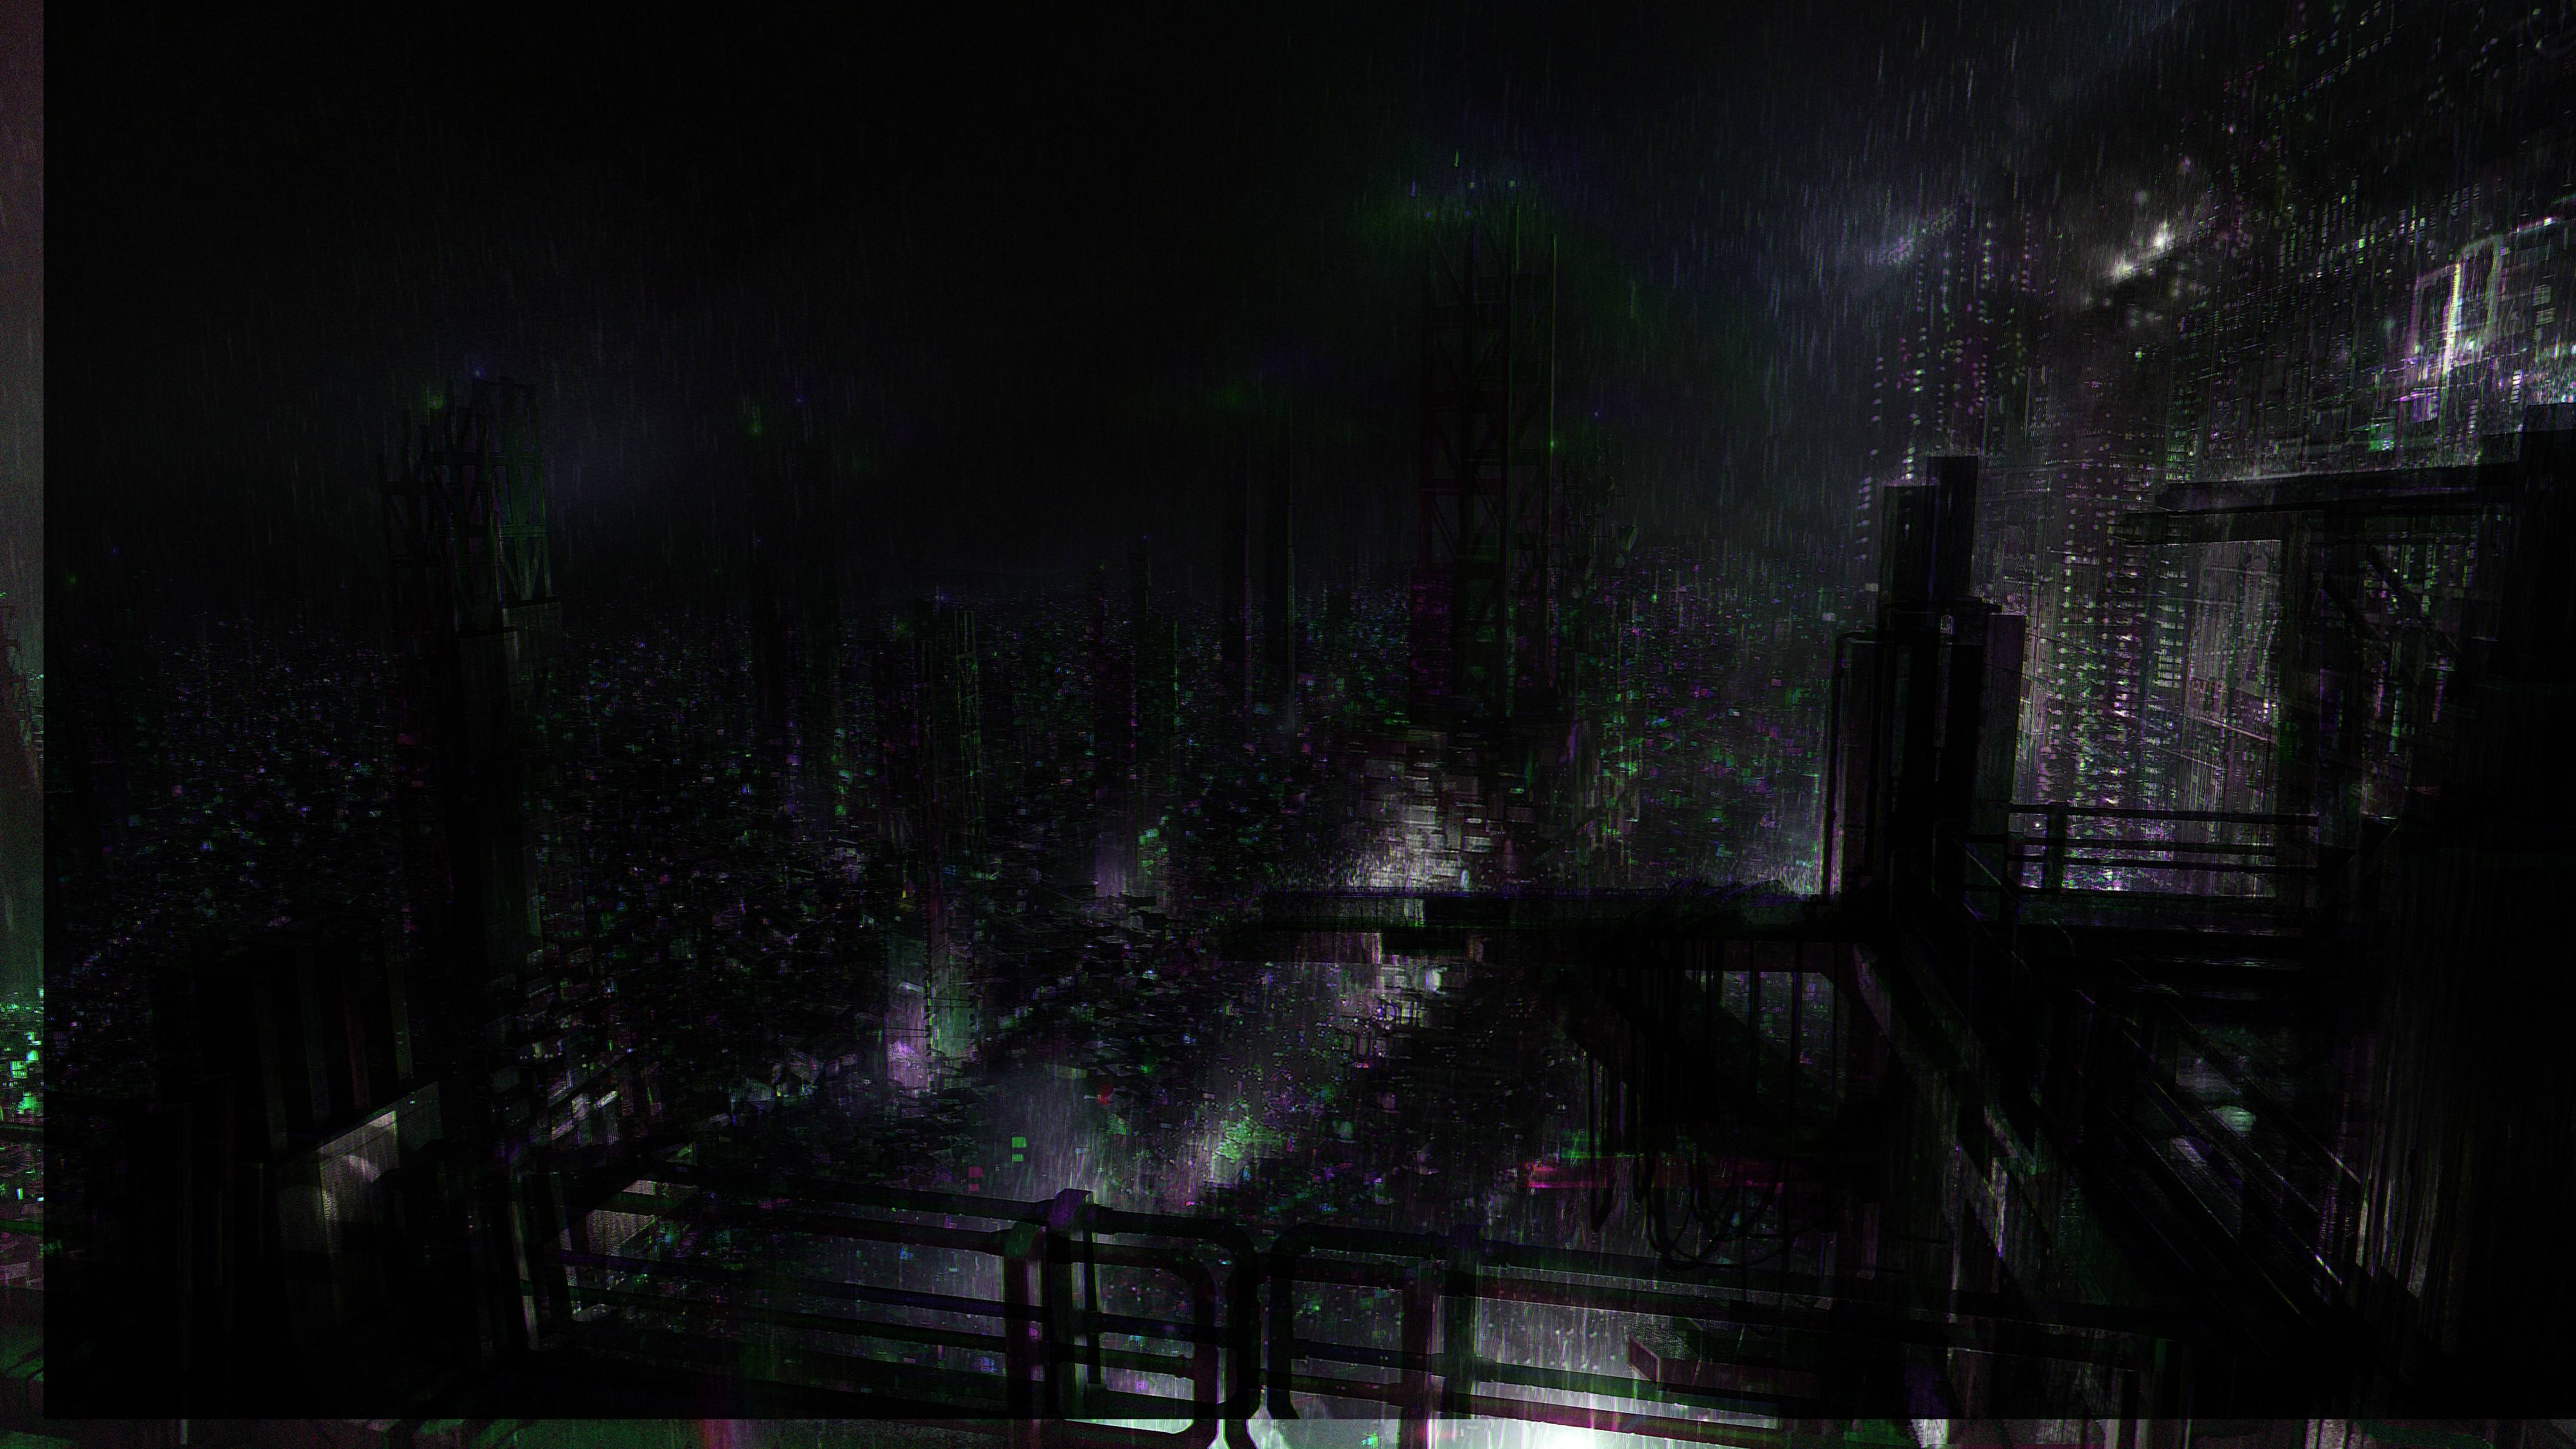 Cyberpunk Wallpaper 4K, Destiny 2, Black background, 5K